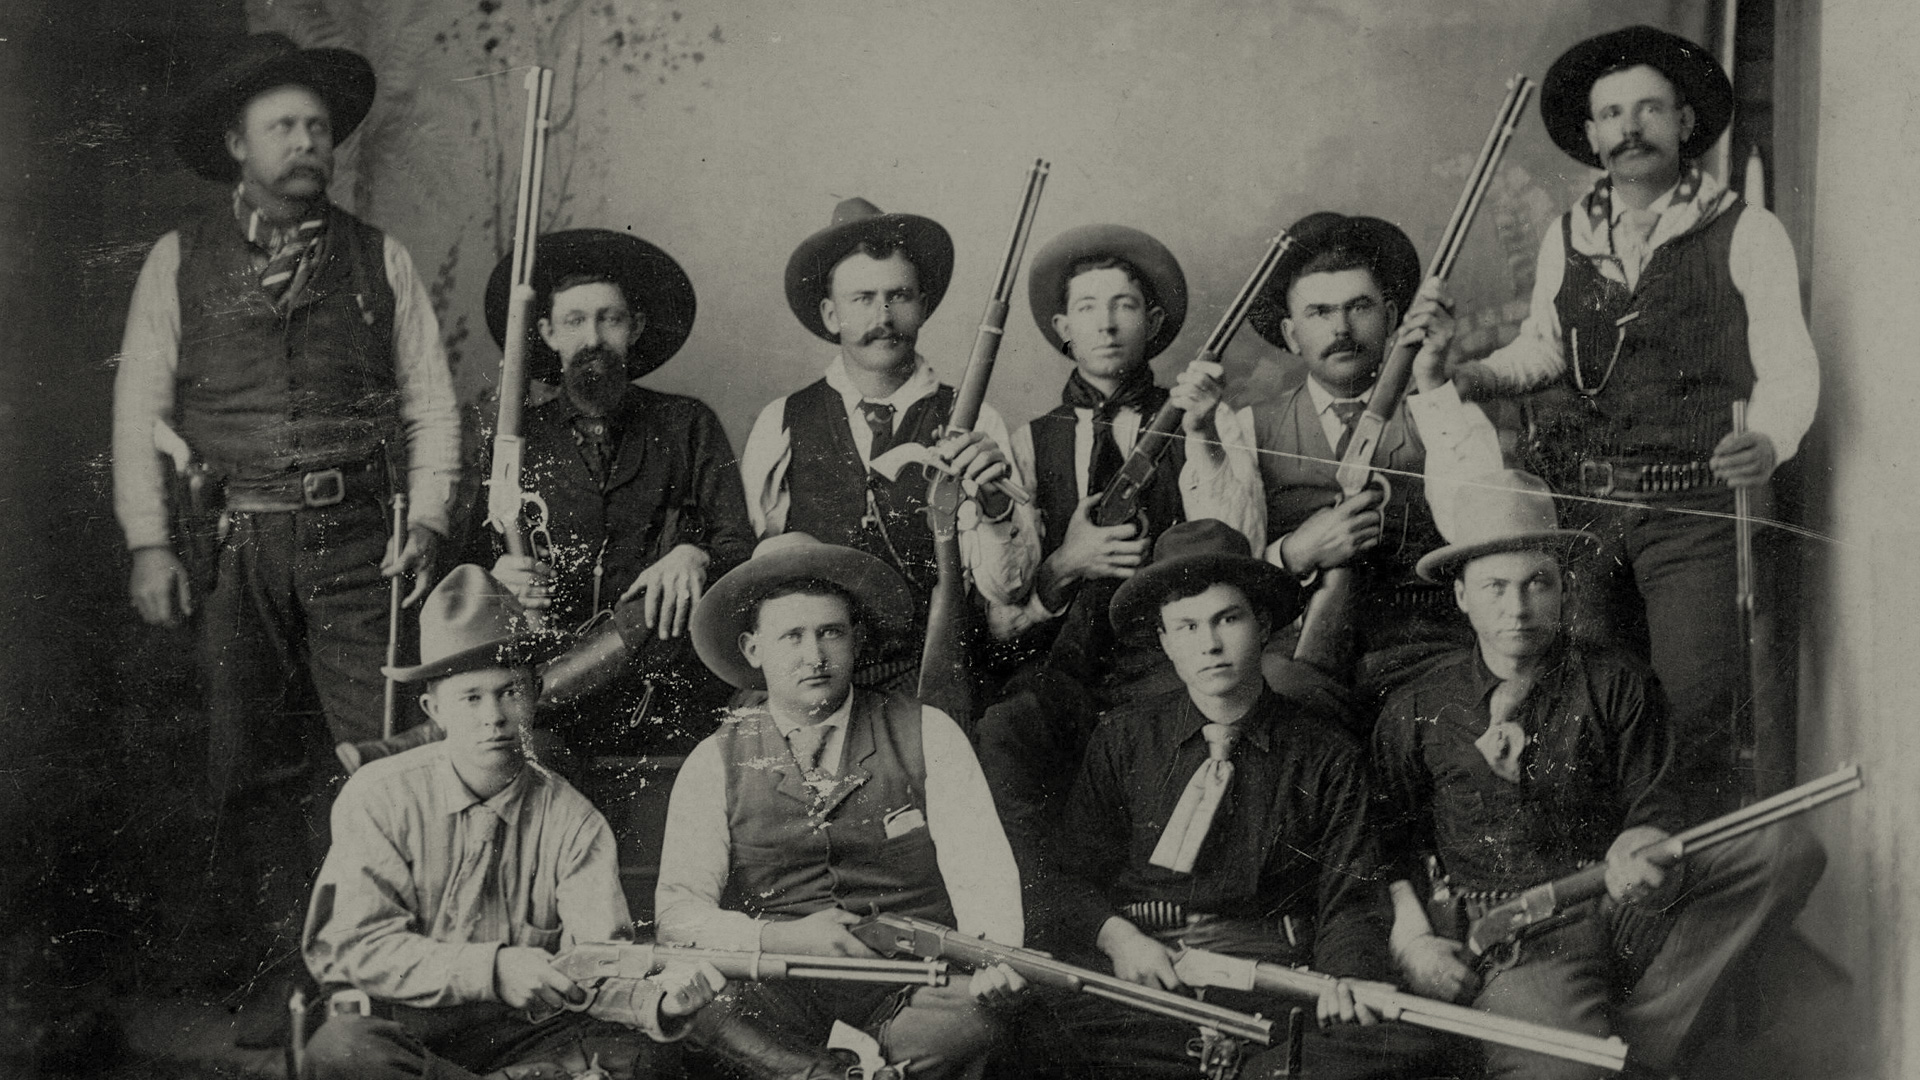 Ranger Firearms - San Antonio Texas - Our Story